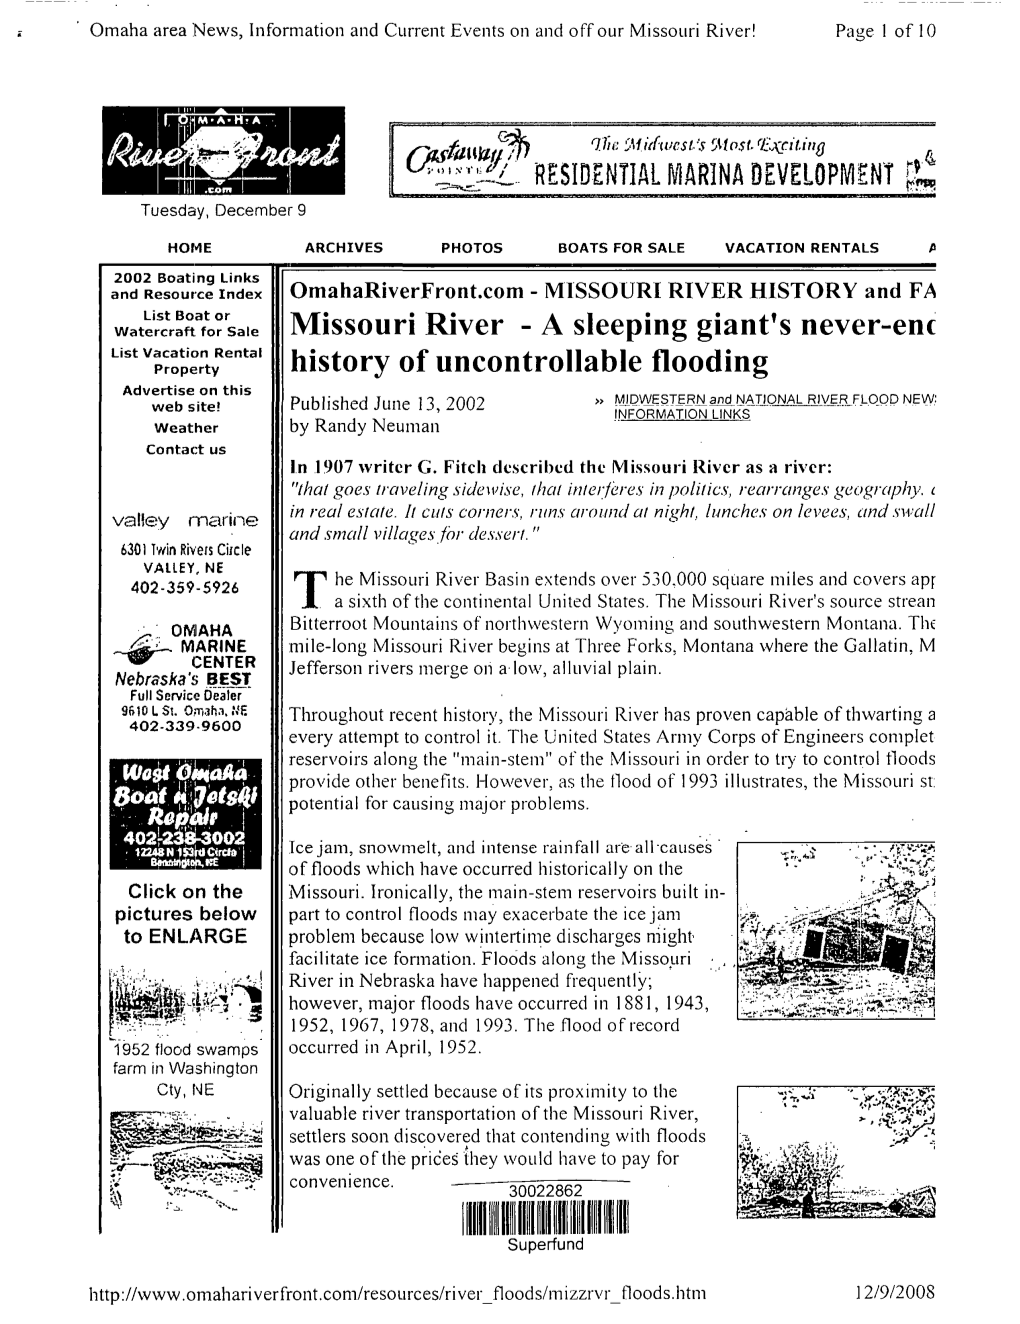 Riverfront Web Site: Never Ending Flood